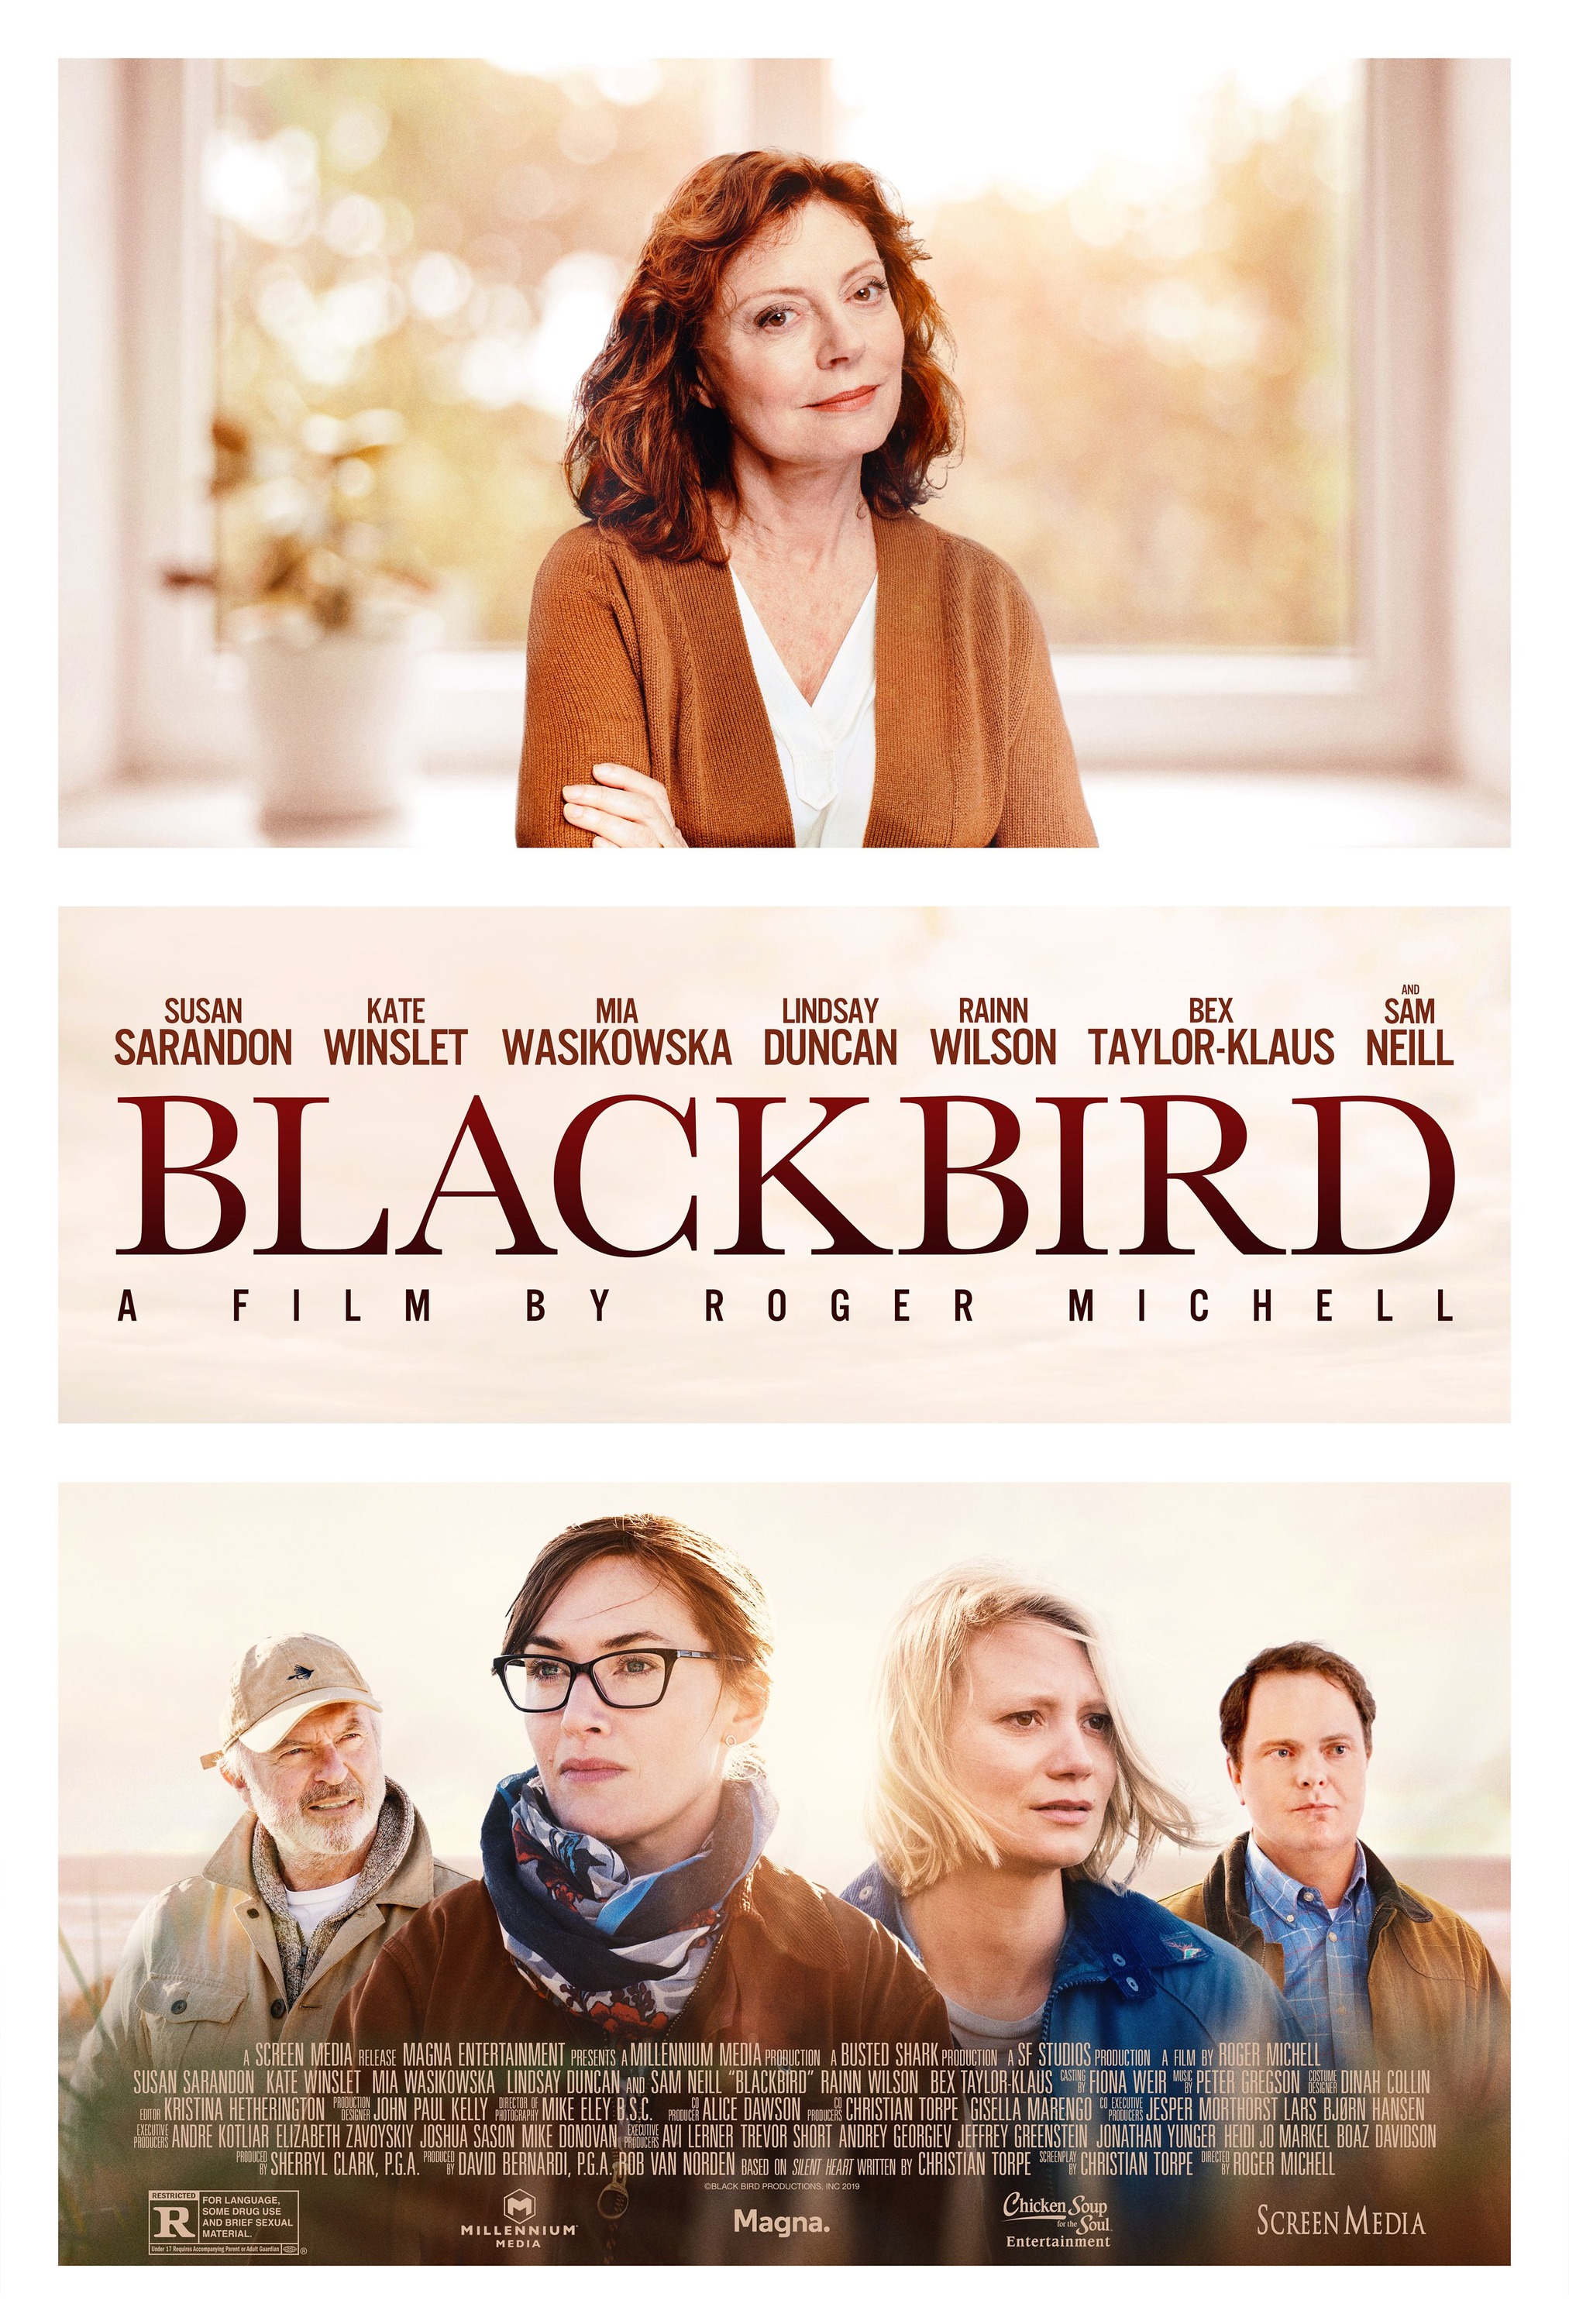 Mega Sized Movie Poster Image for Blackbird (#1 of 2)